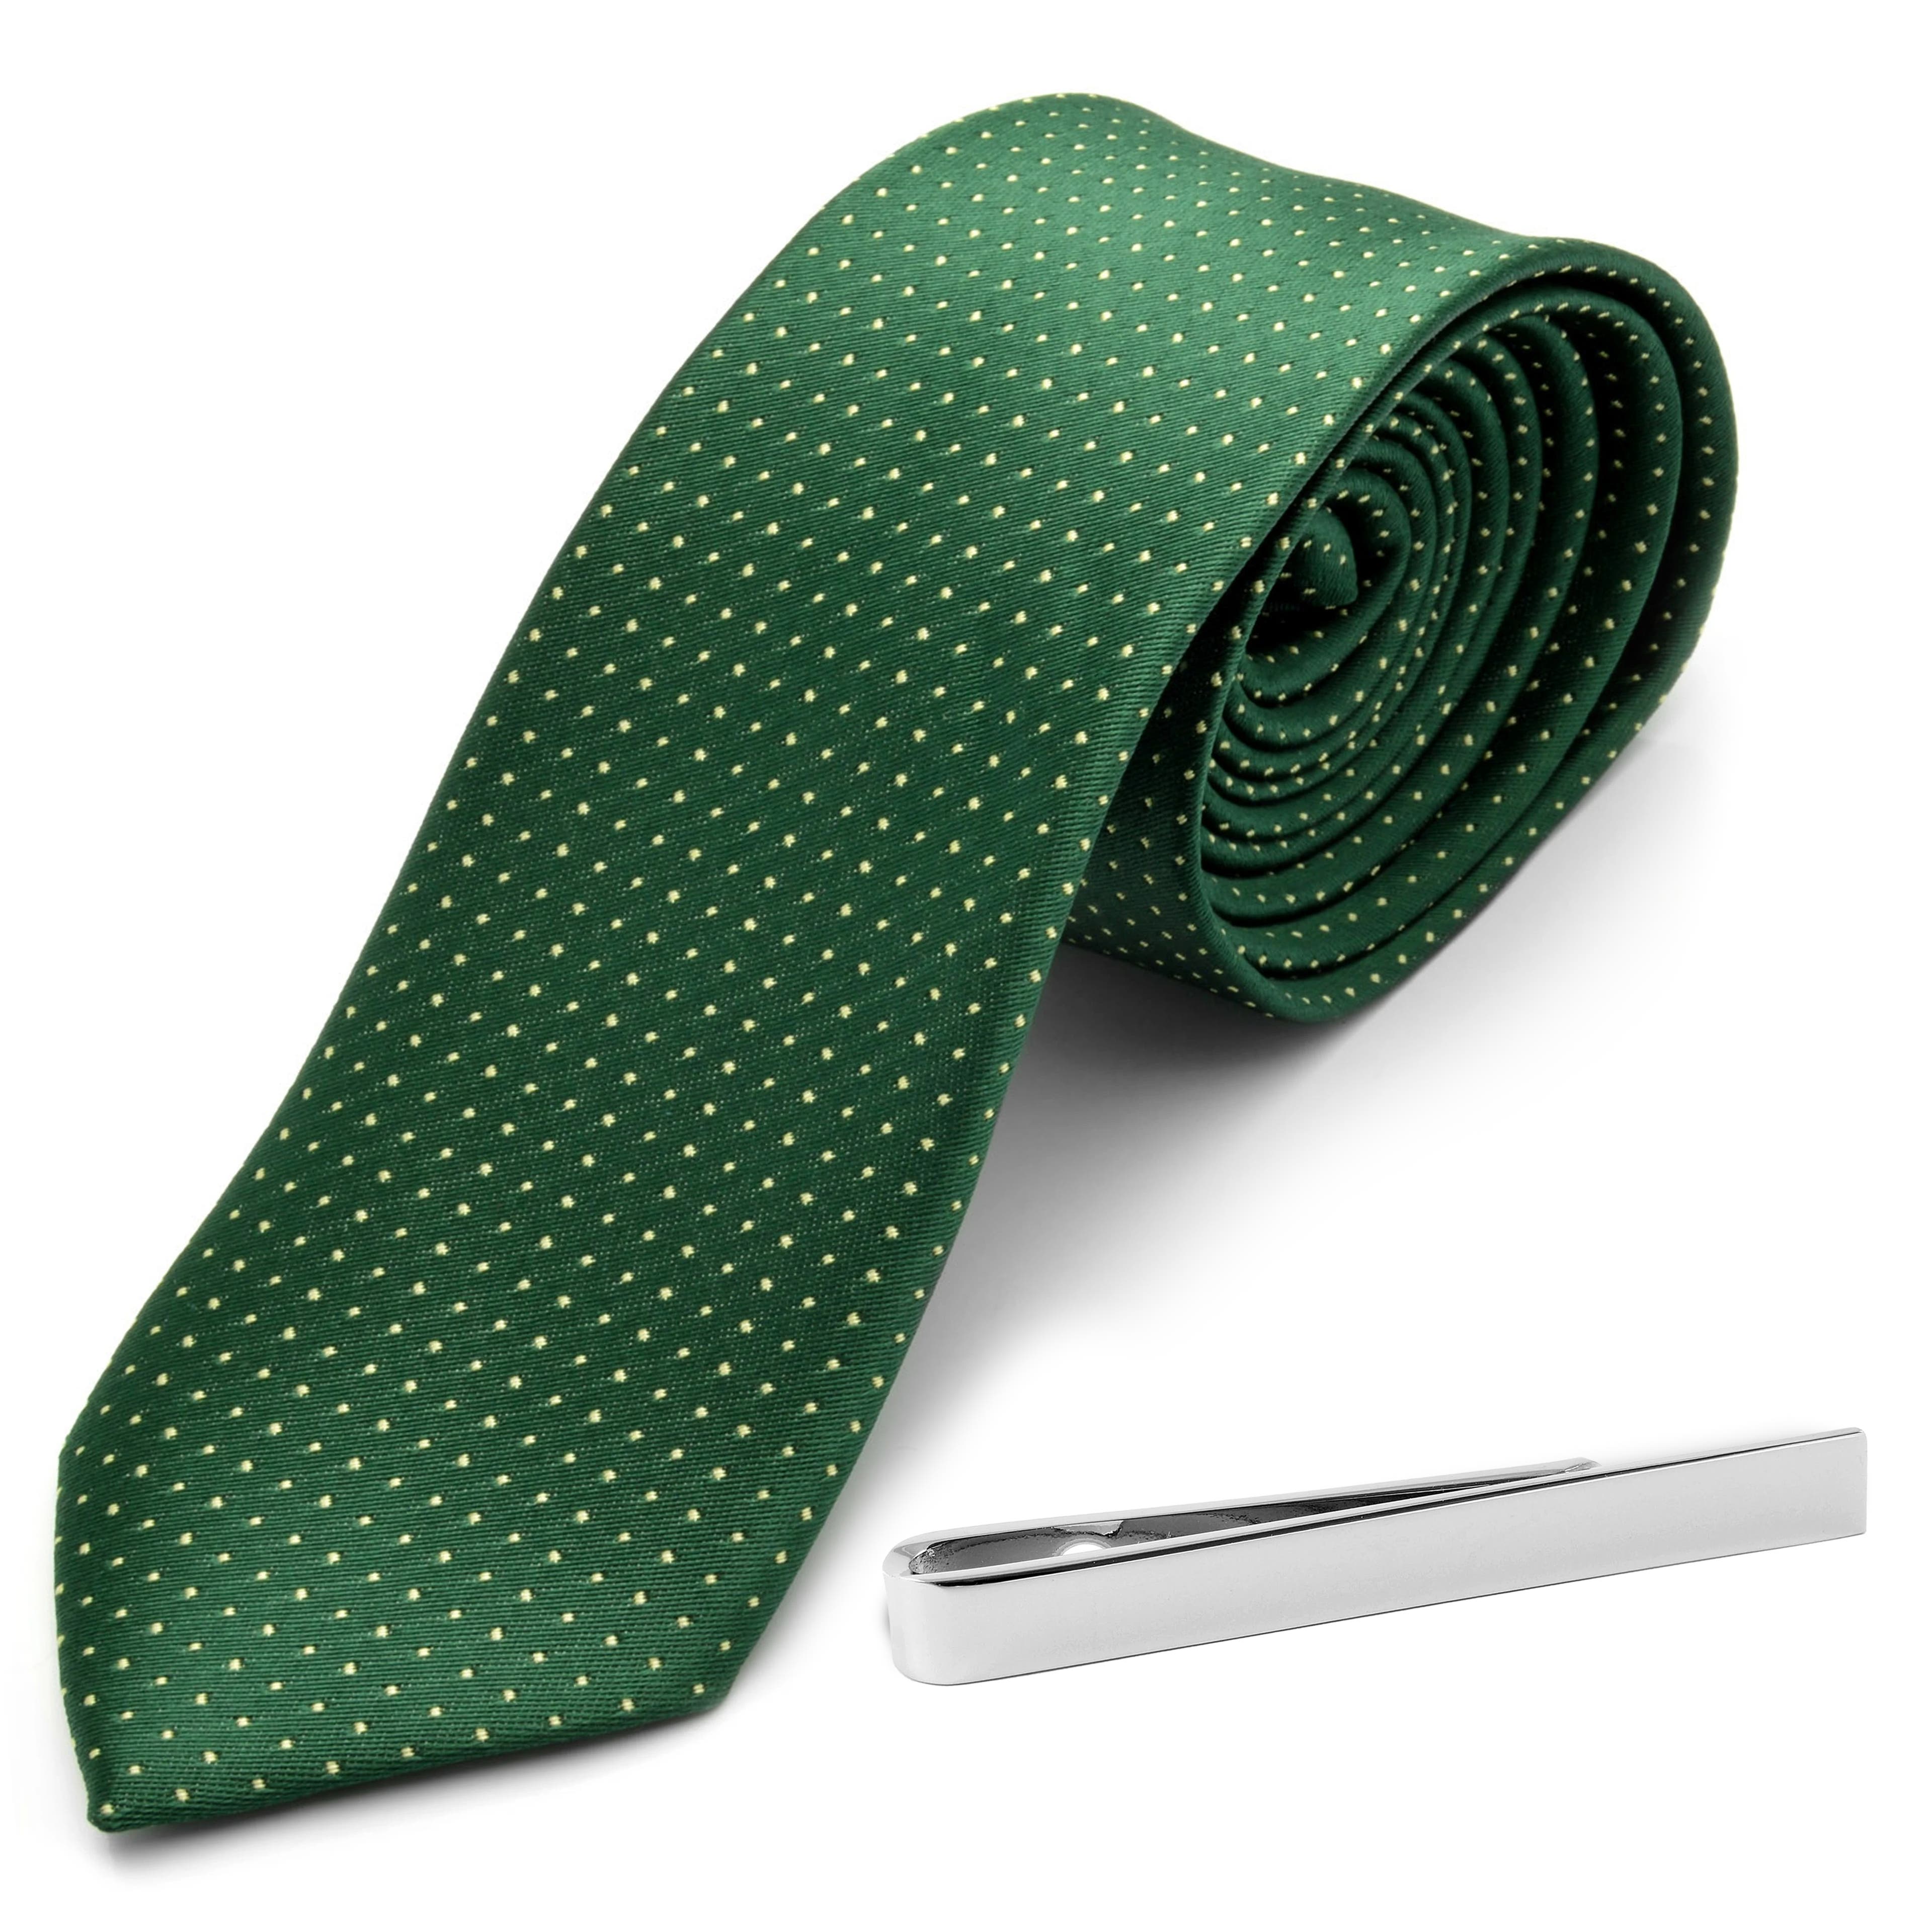 Green Polka Dot Necktie and Silver-Tone Tie Bar Set